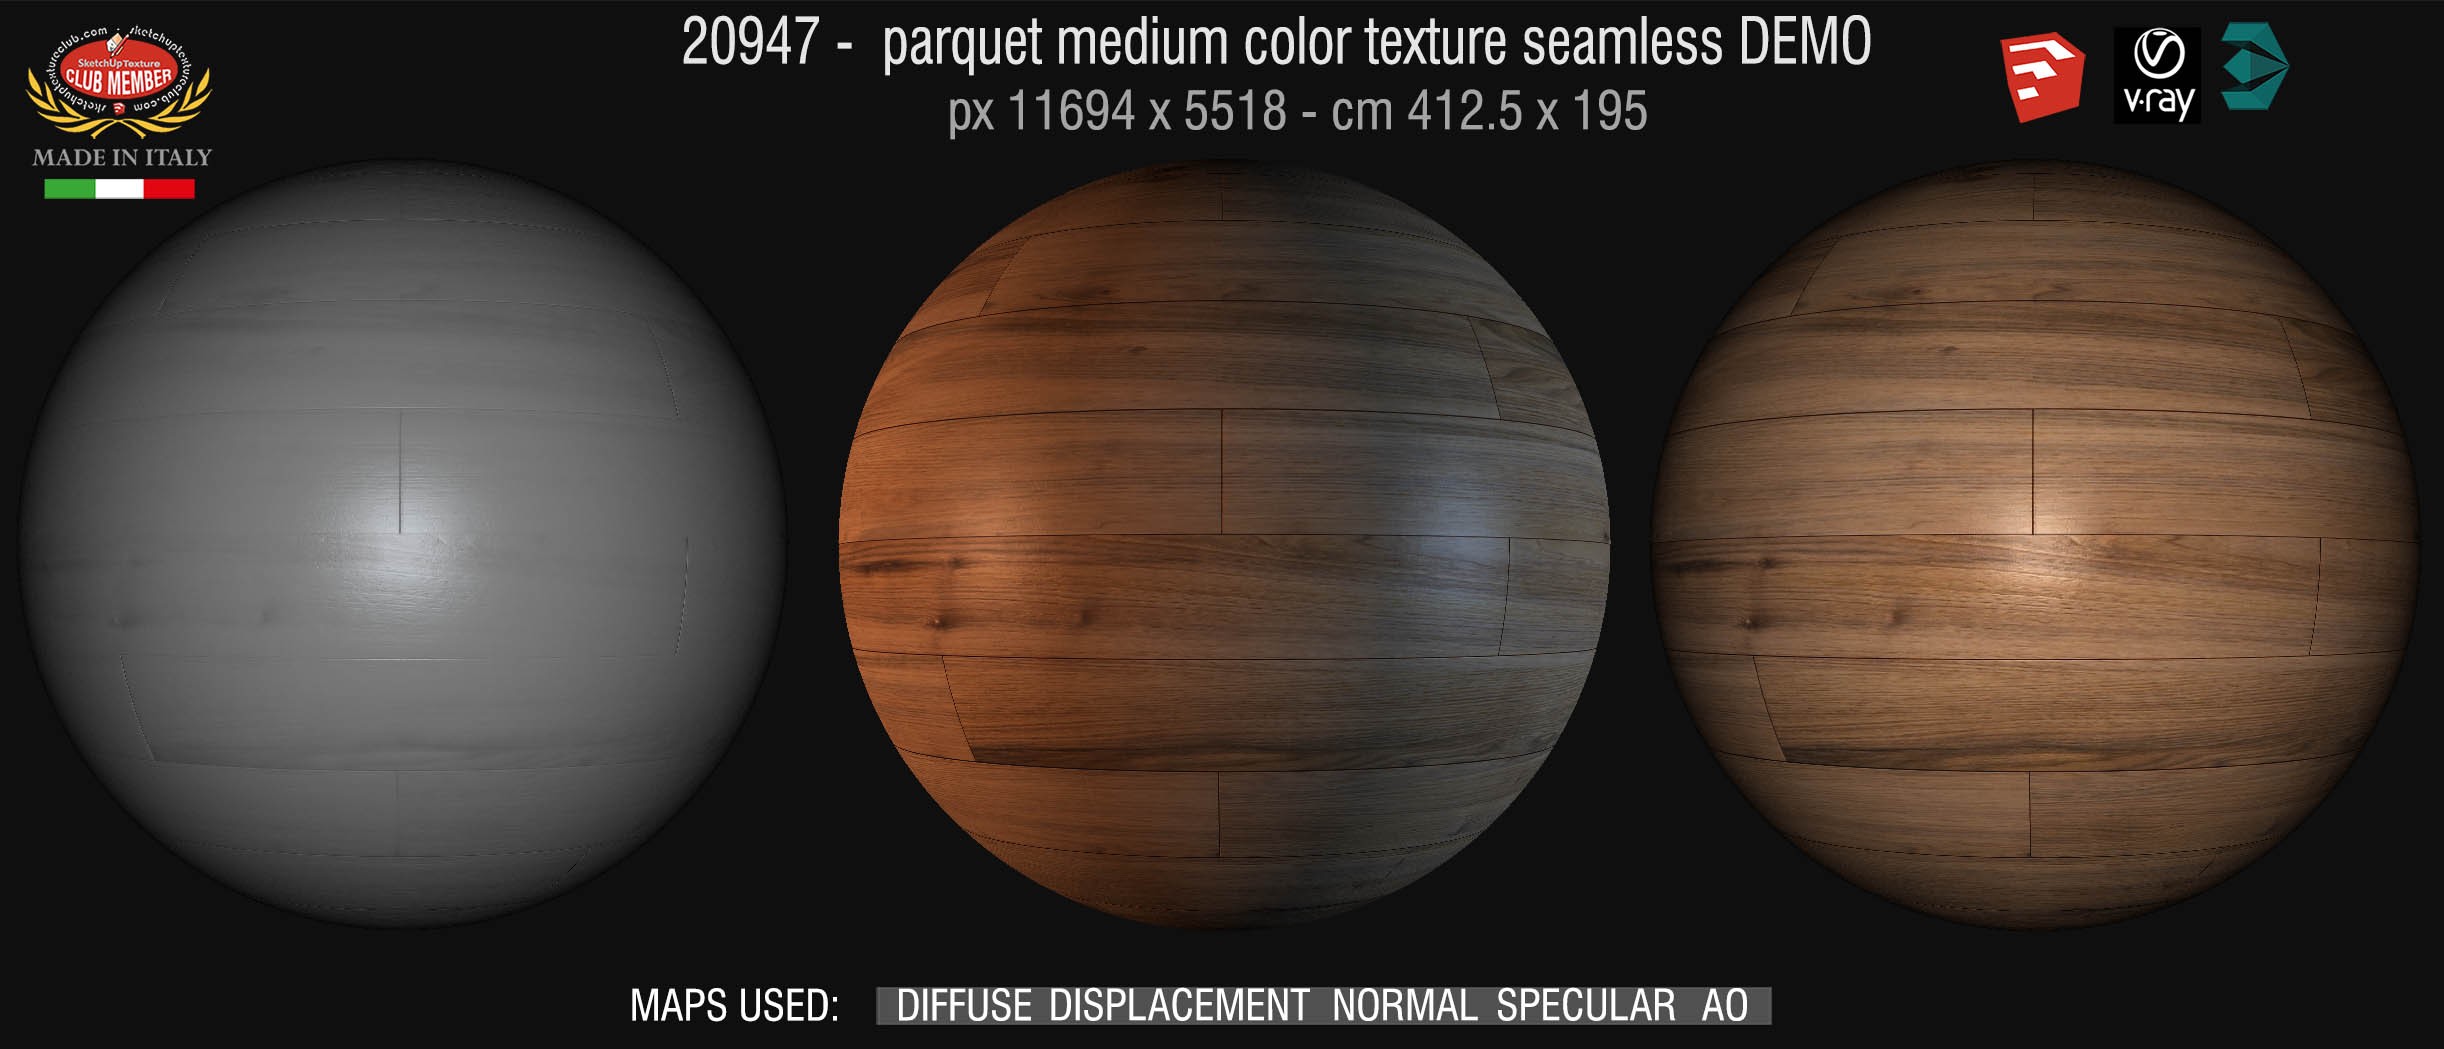 20947 Parquet medium color texture seamless + maps DEMO